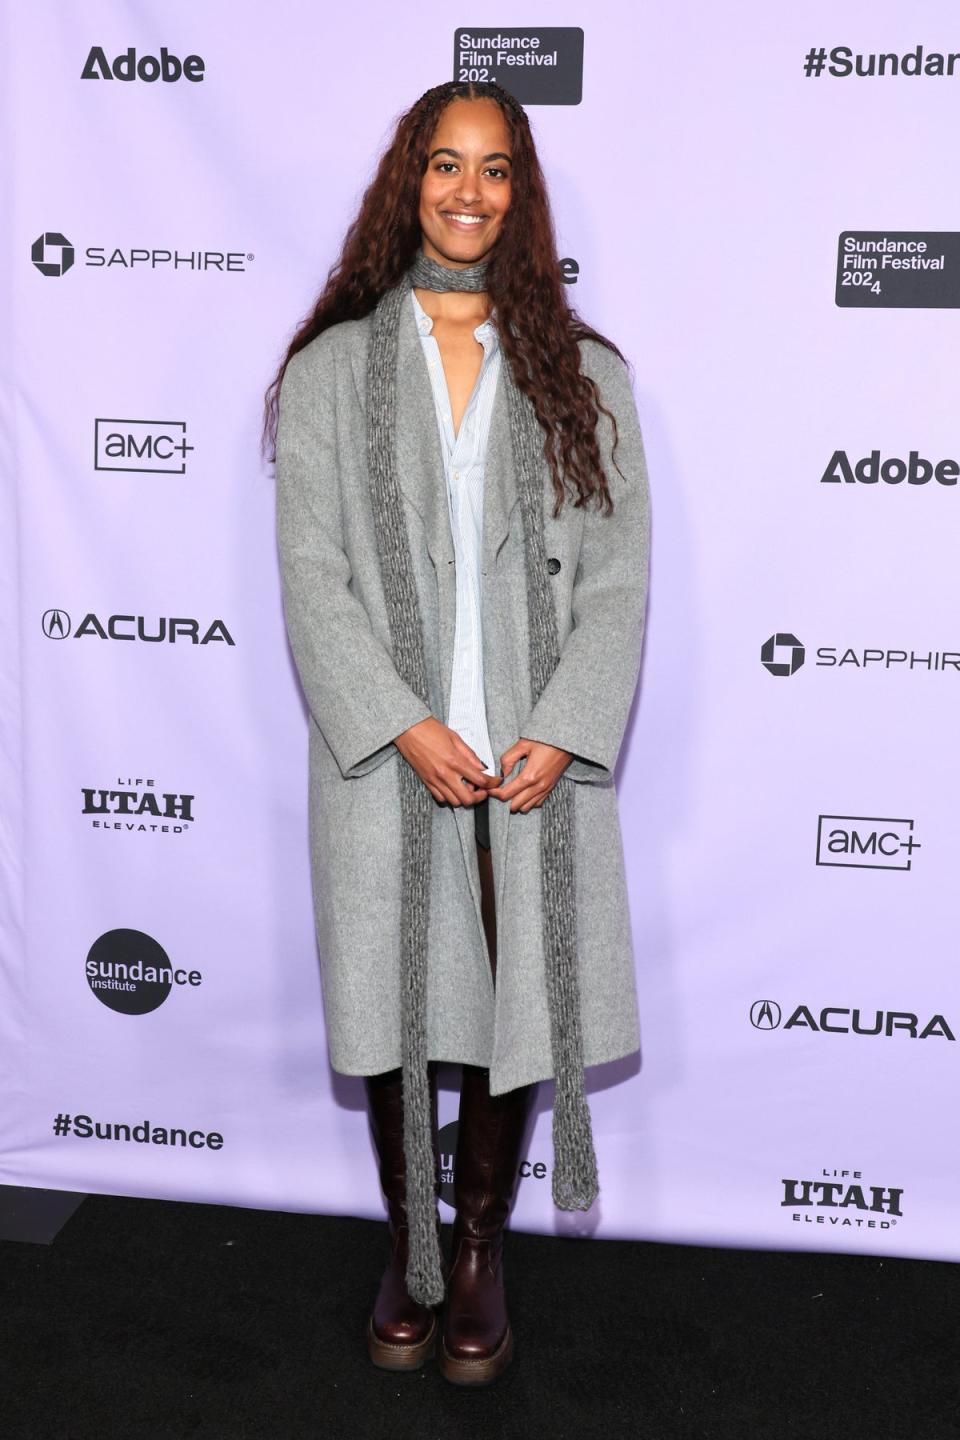 Malia Obama makes red carpet debut at Sundance Film Festival